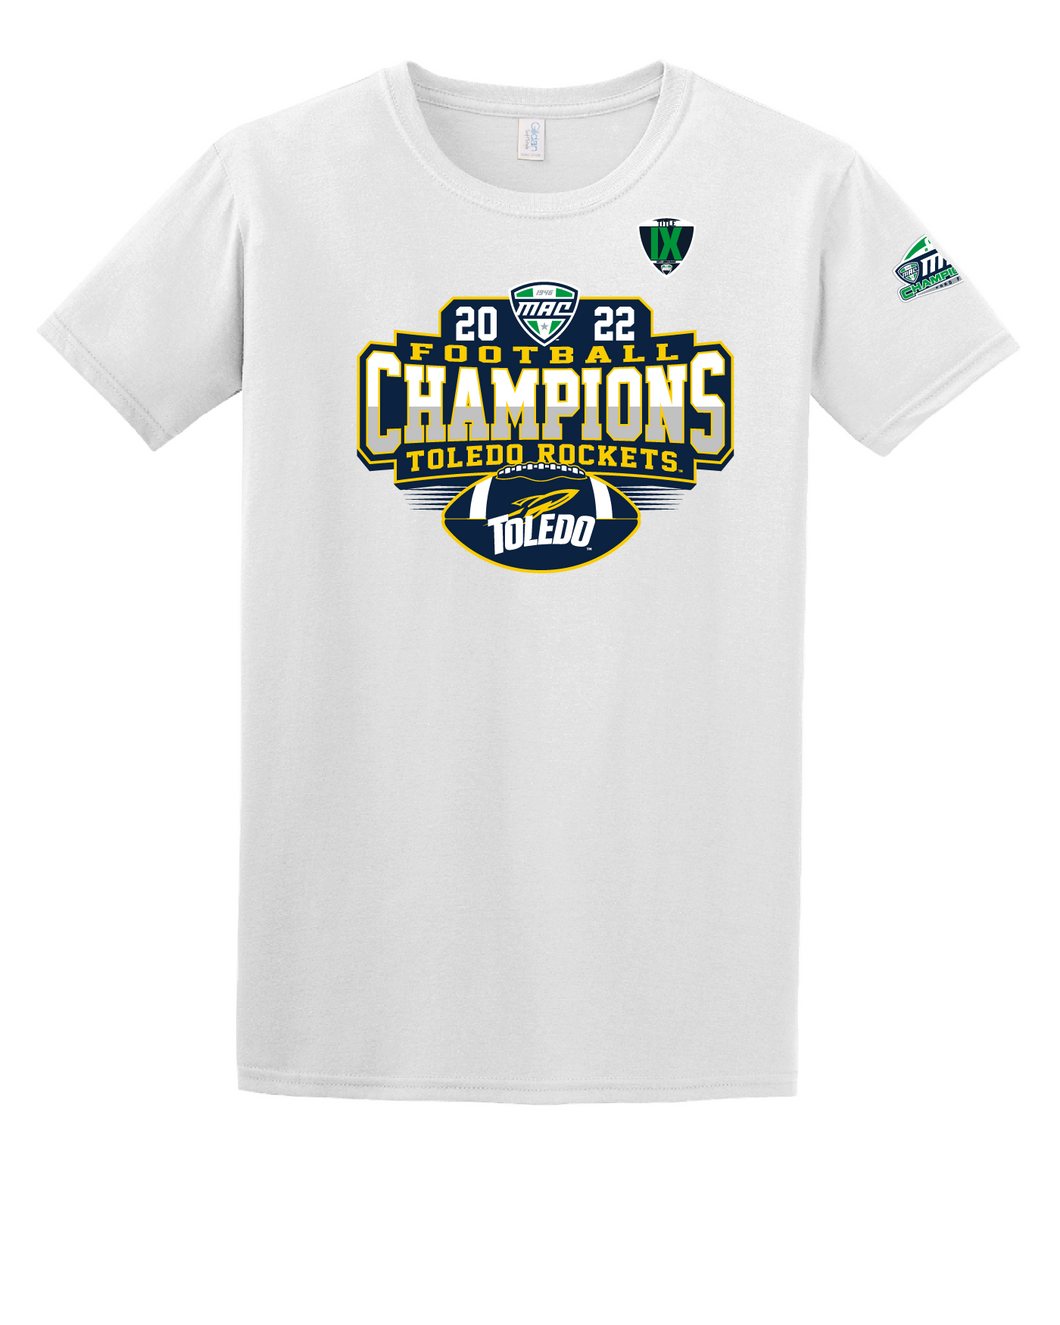 2019 National Champions Locker Room T-Shirt - Mincer's of